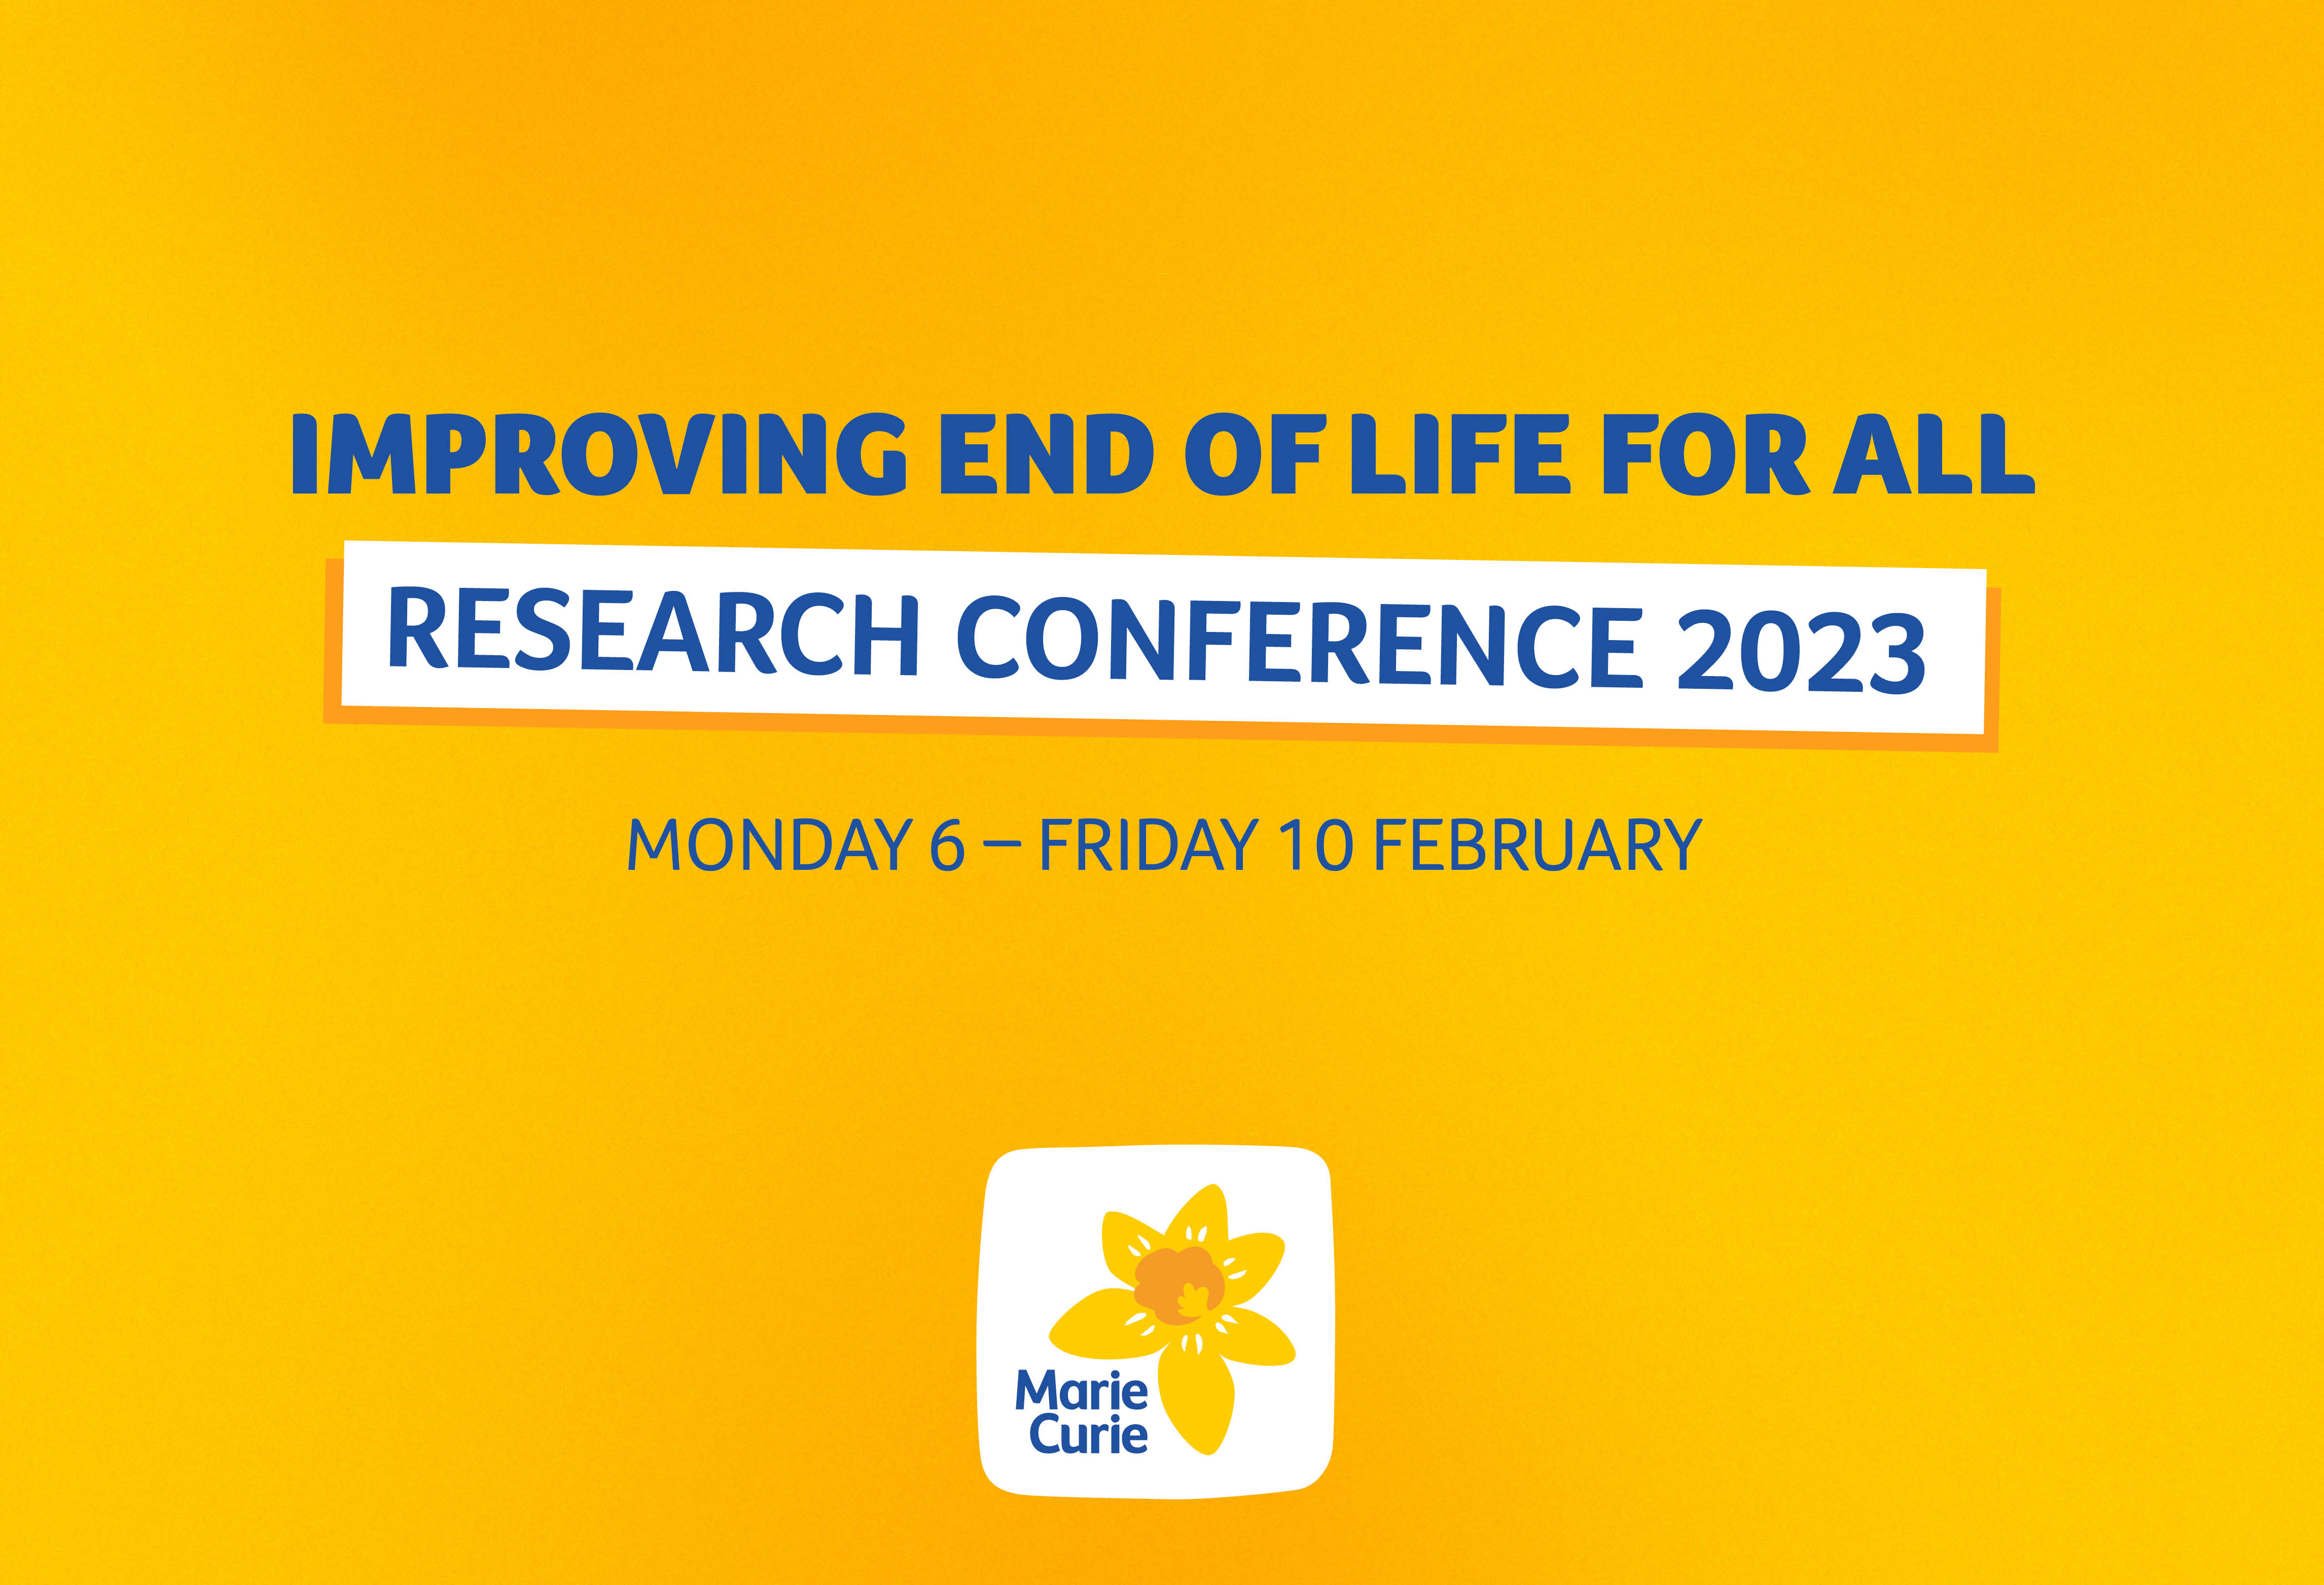 Marie-Curie Research Conferenece 2023 February 6-10